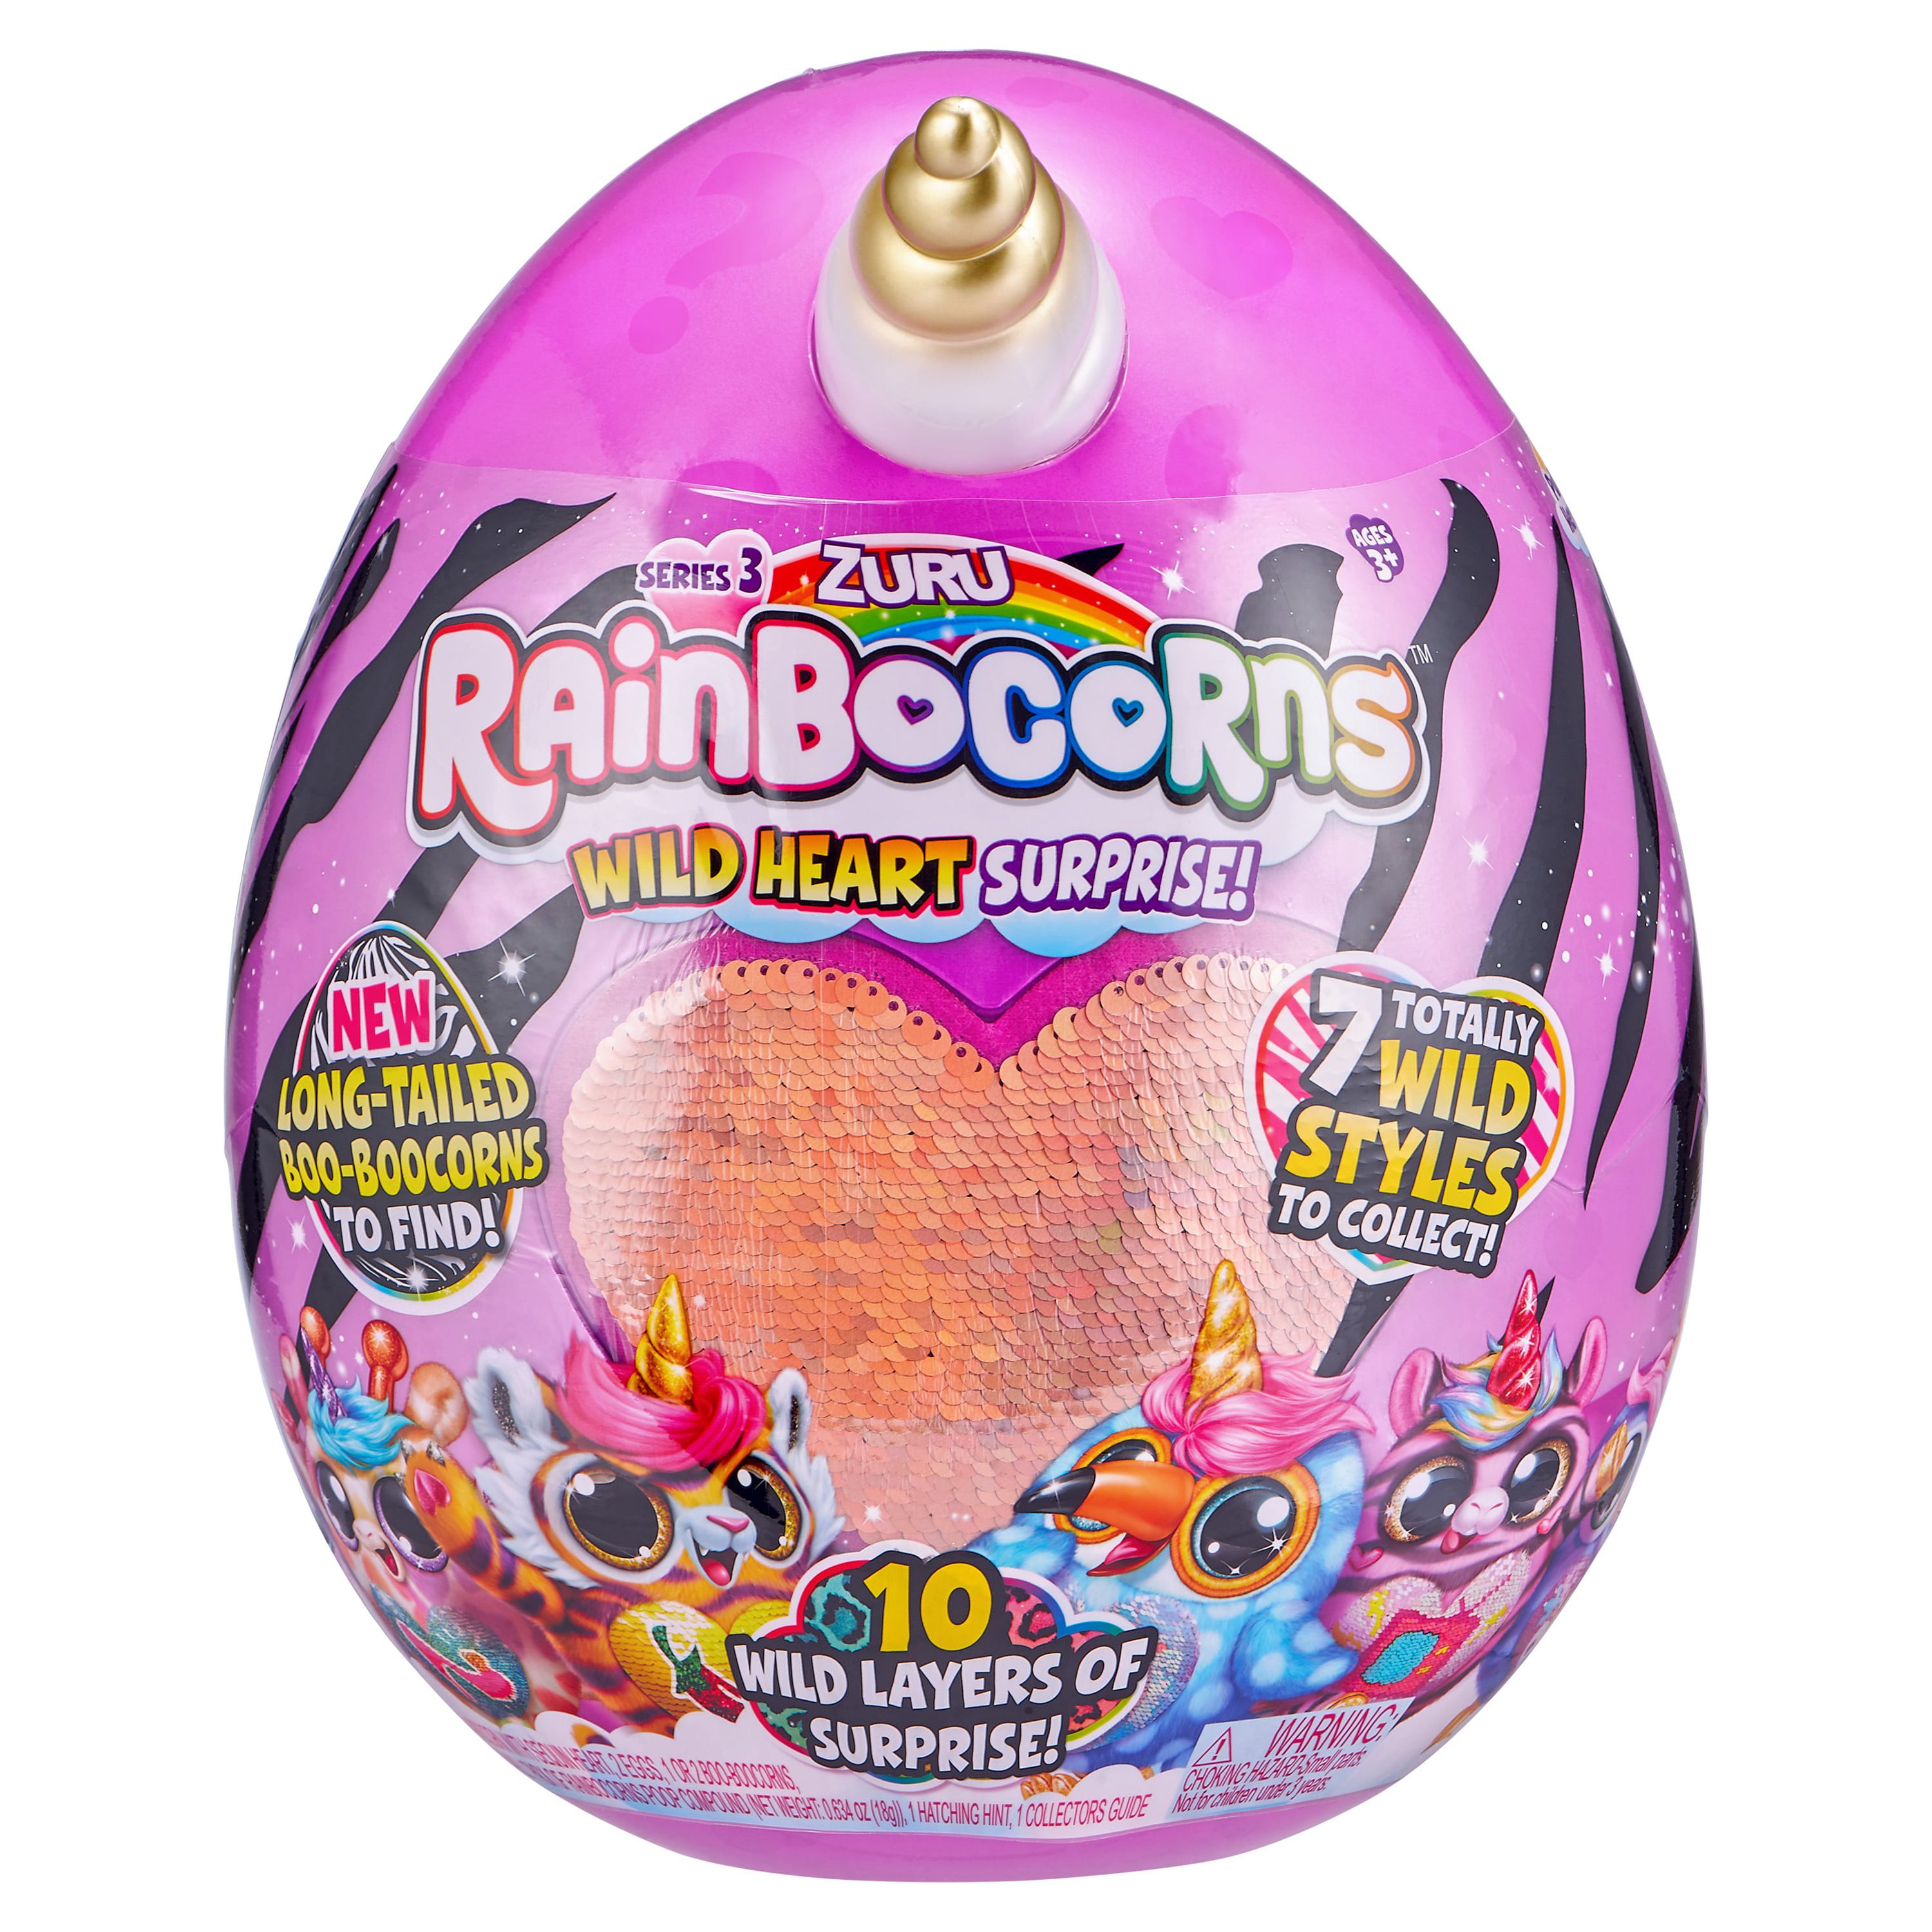 Rainbocorns Sequin Surprise Plush in Giant Mystery Egg by ZURU - image 5 of 19